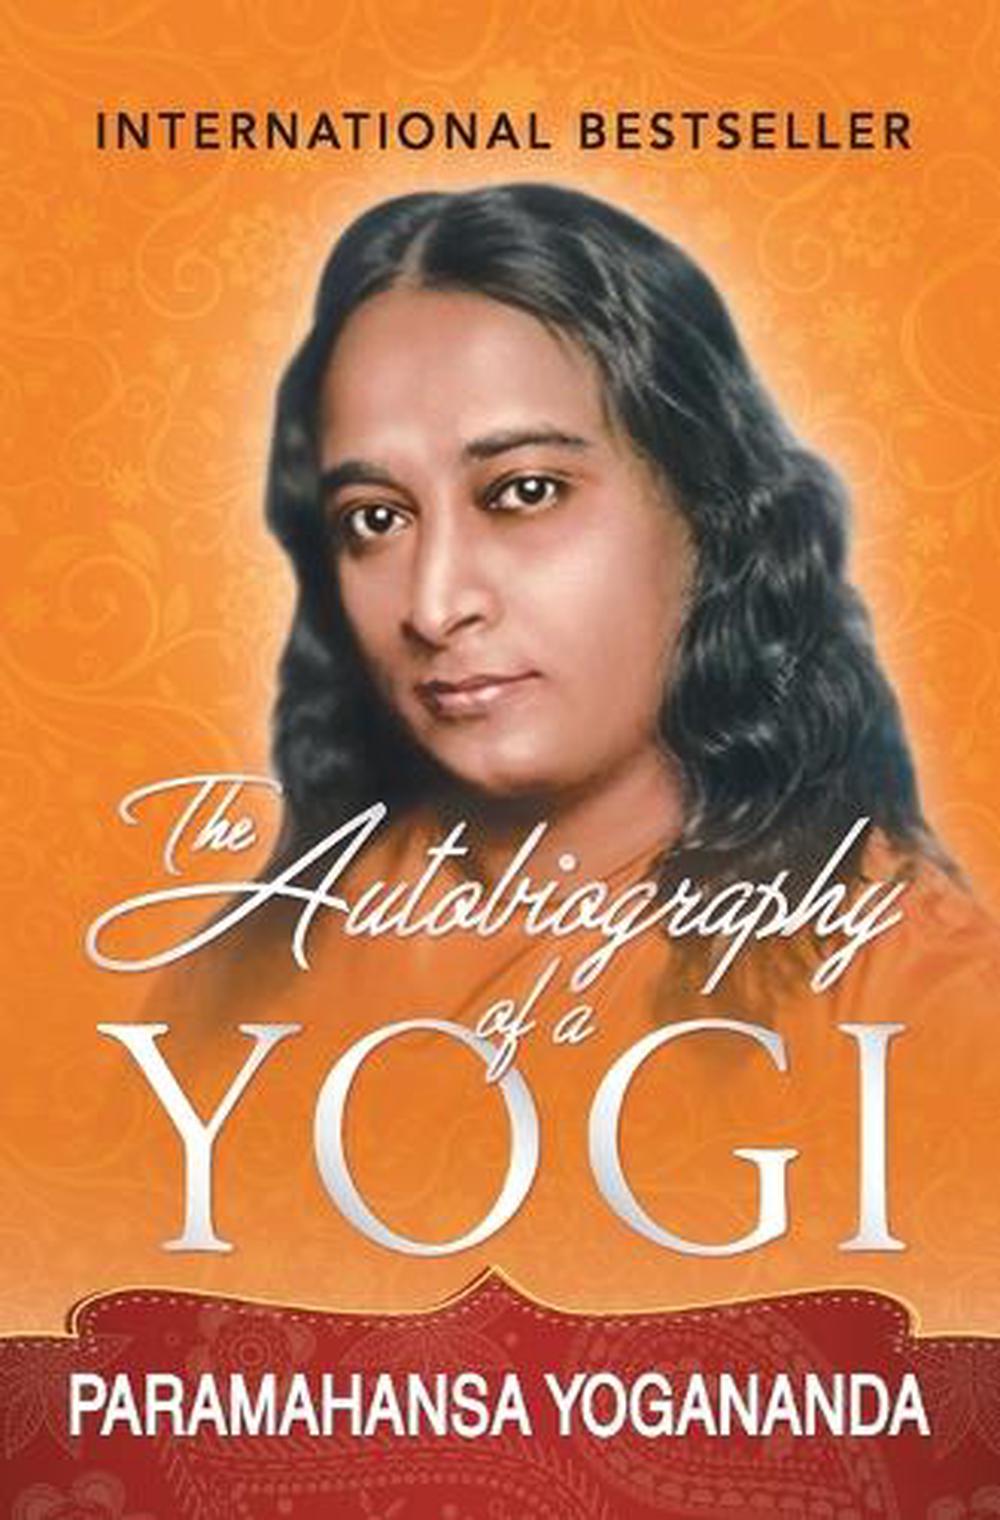 autobiography of yogi download